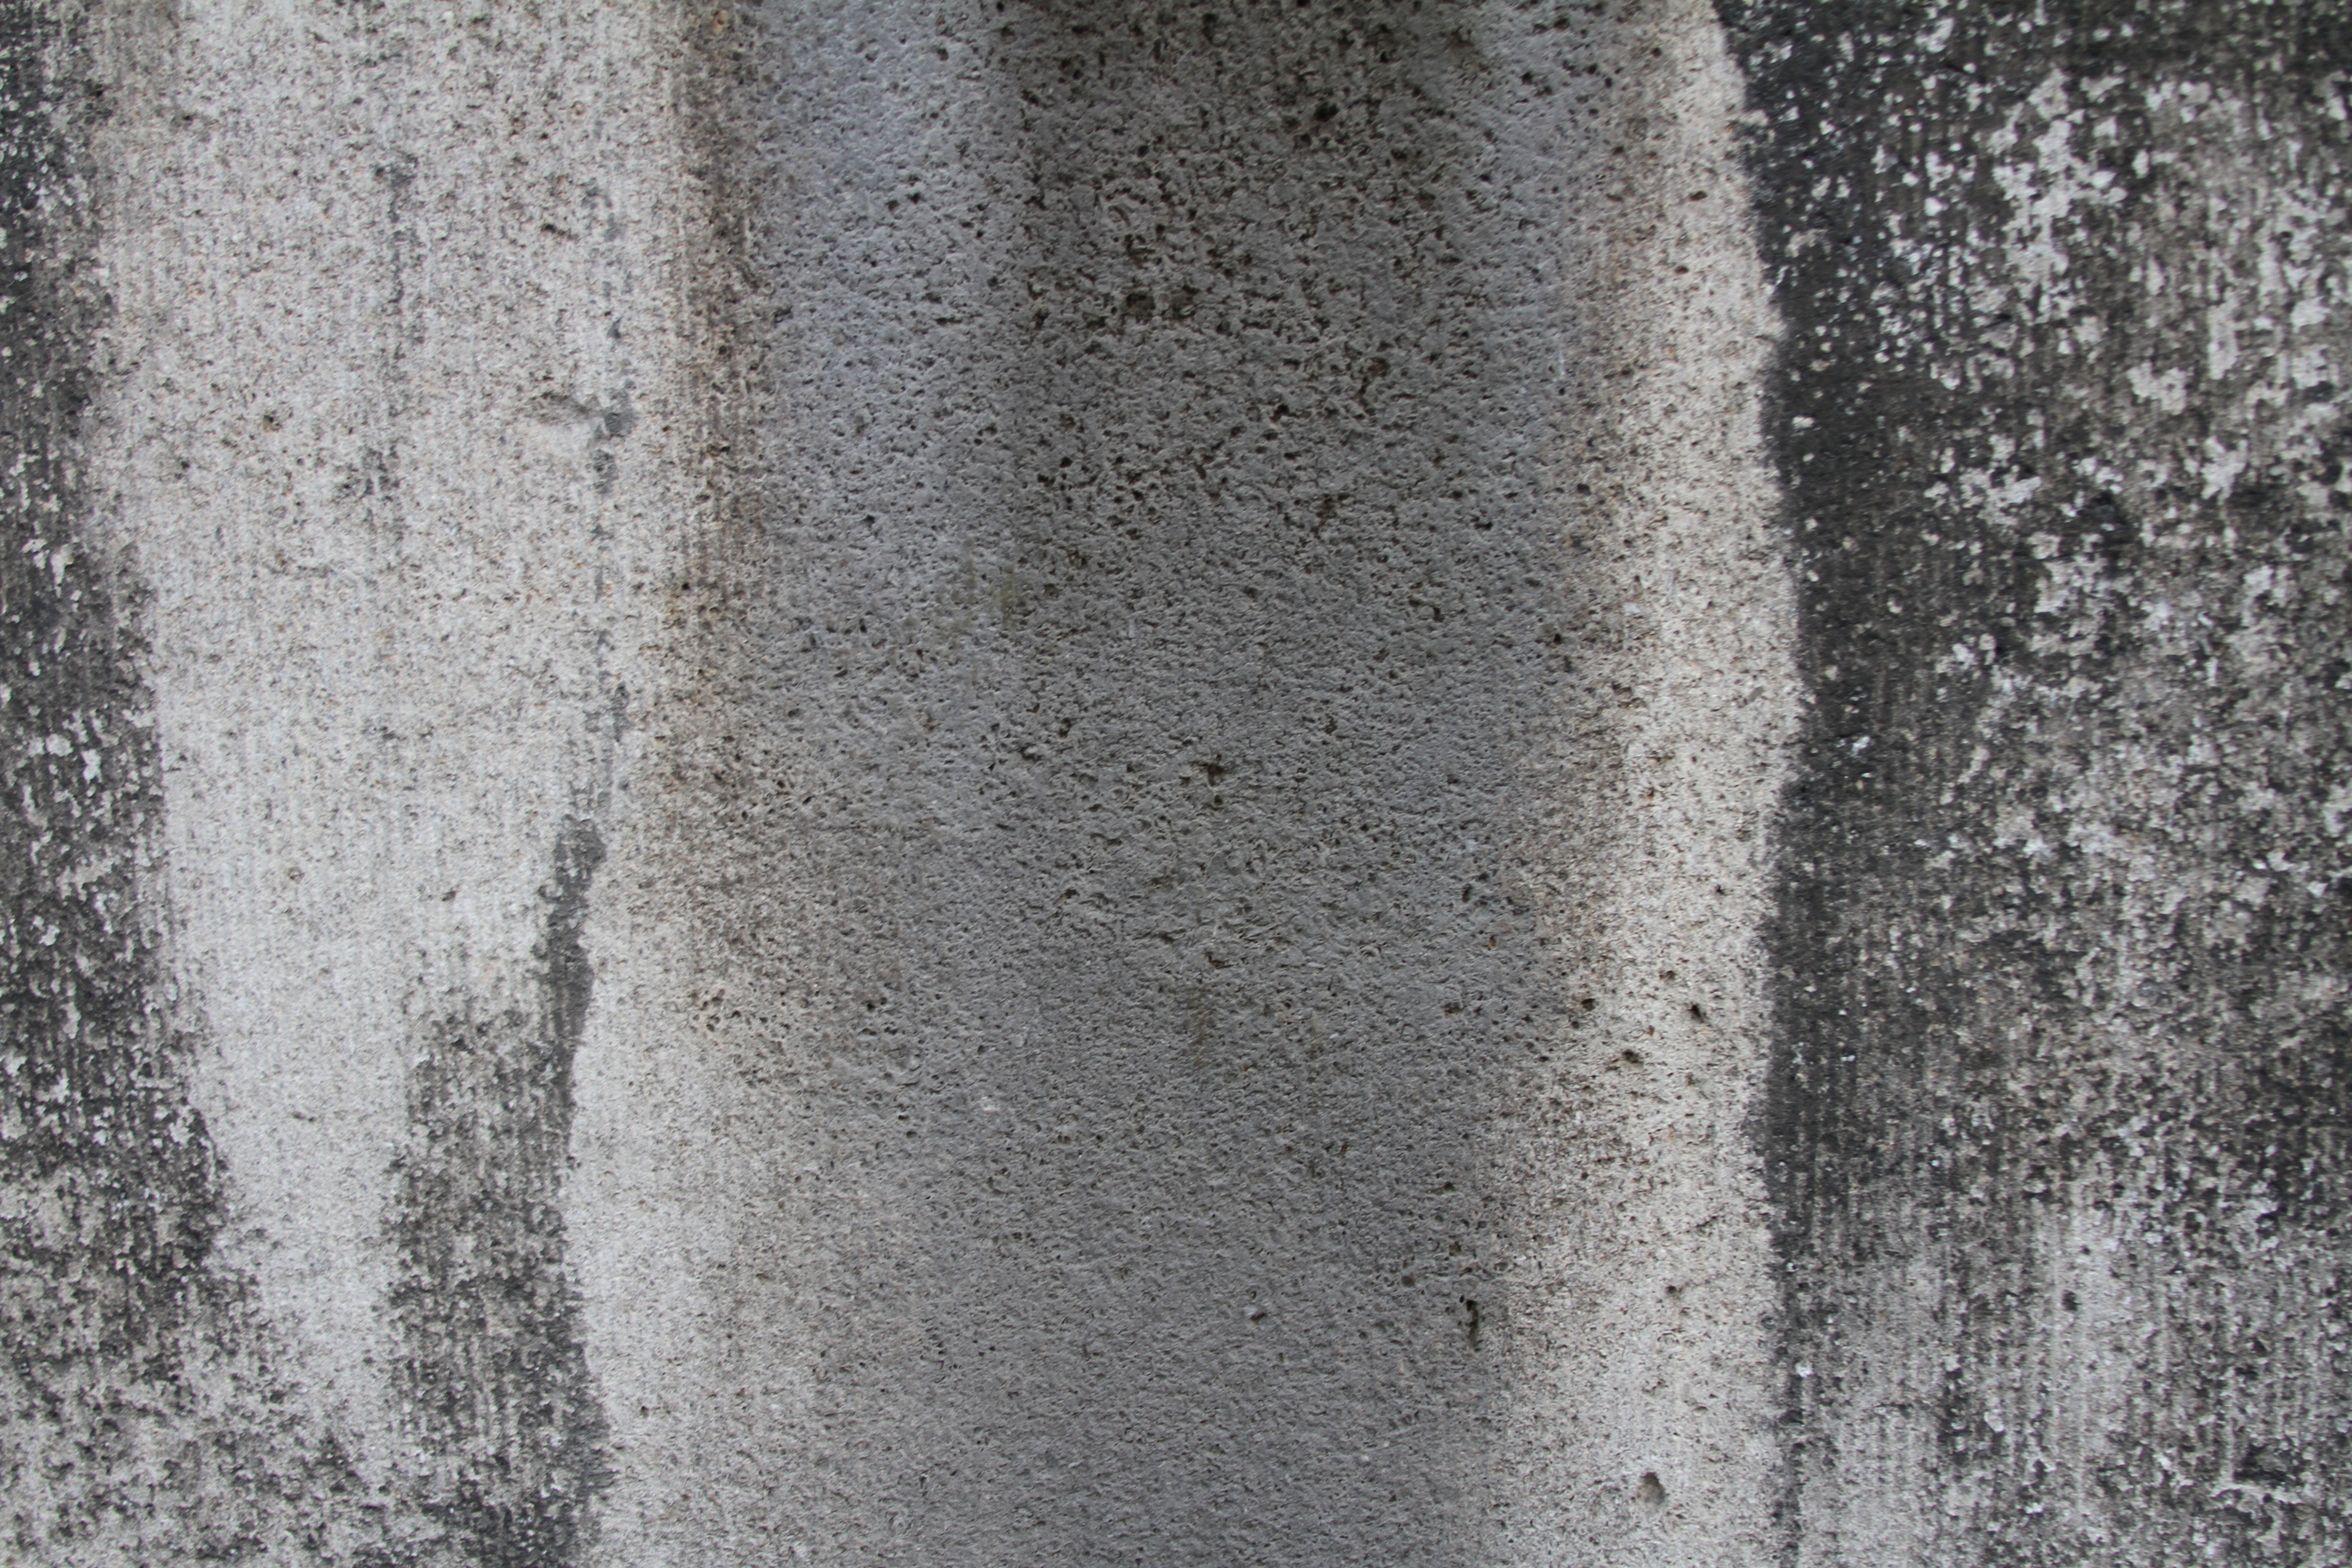 Grunge Concrete (2) - 14Textures